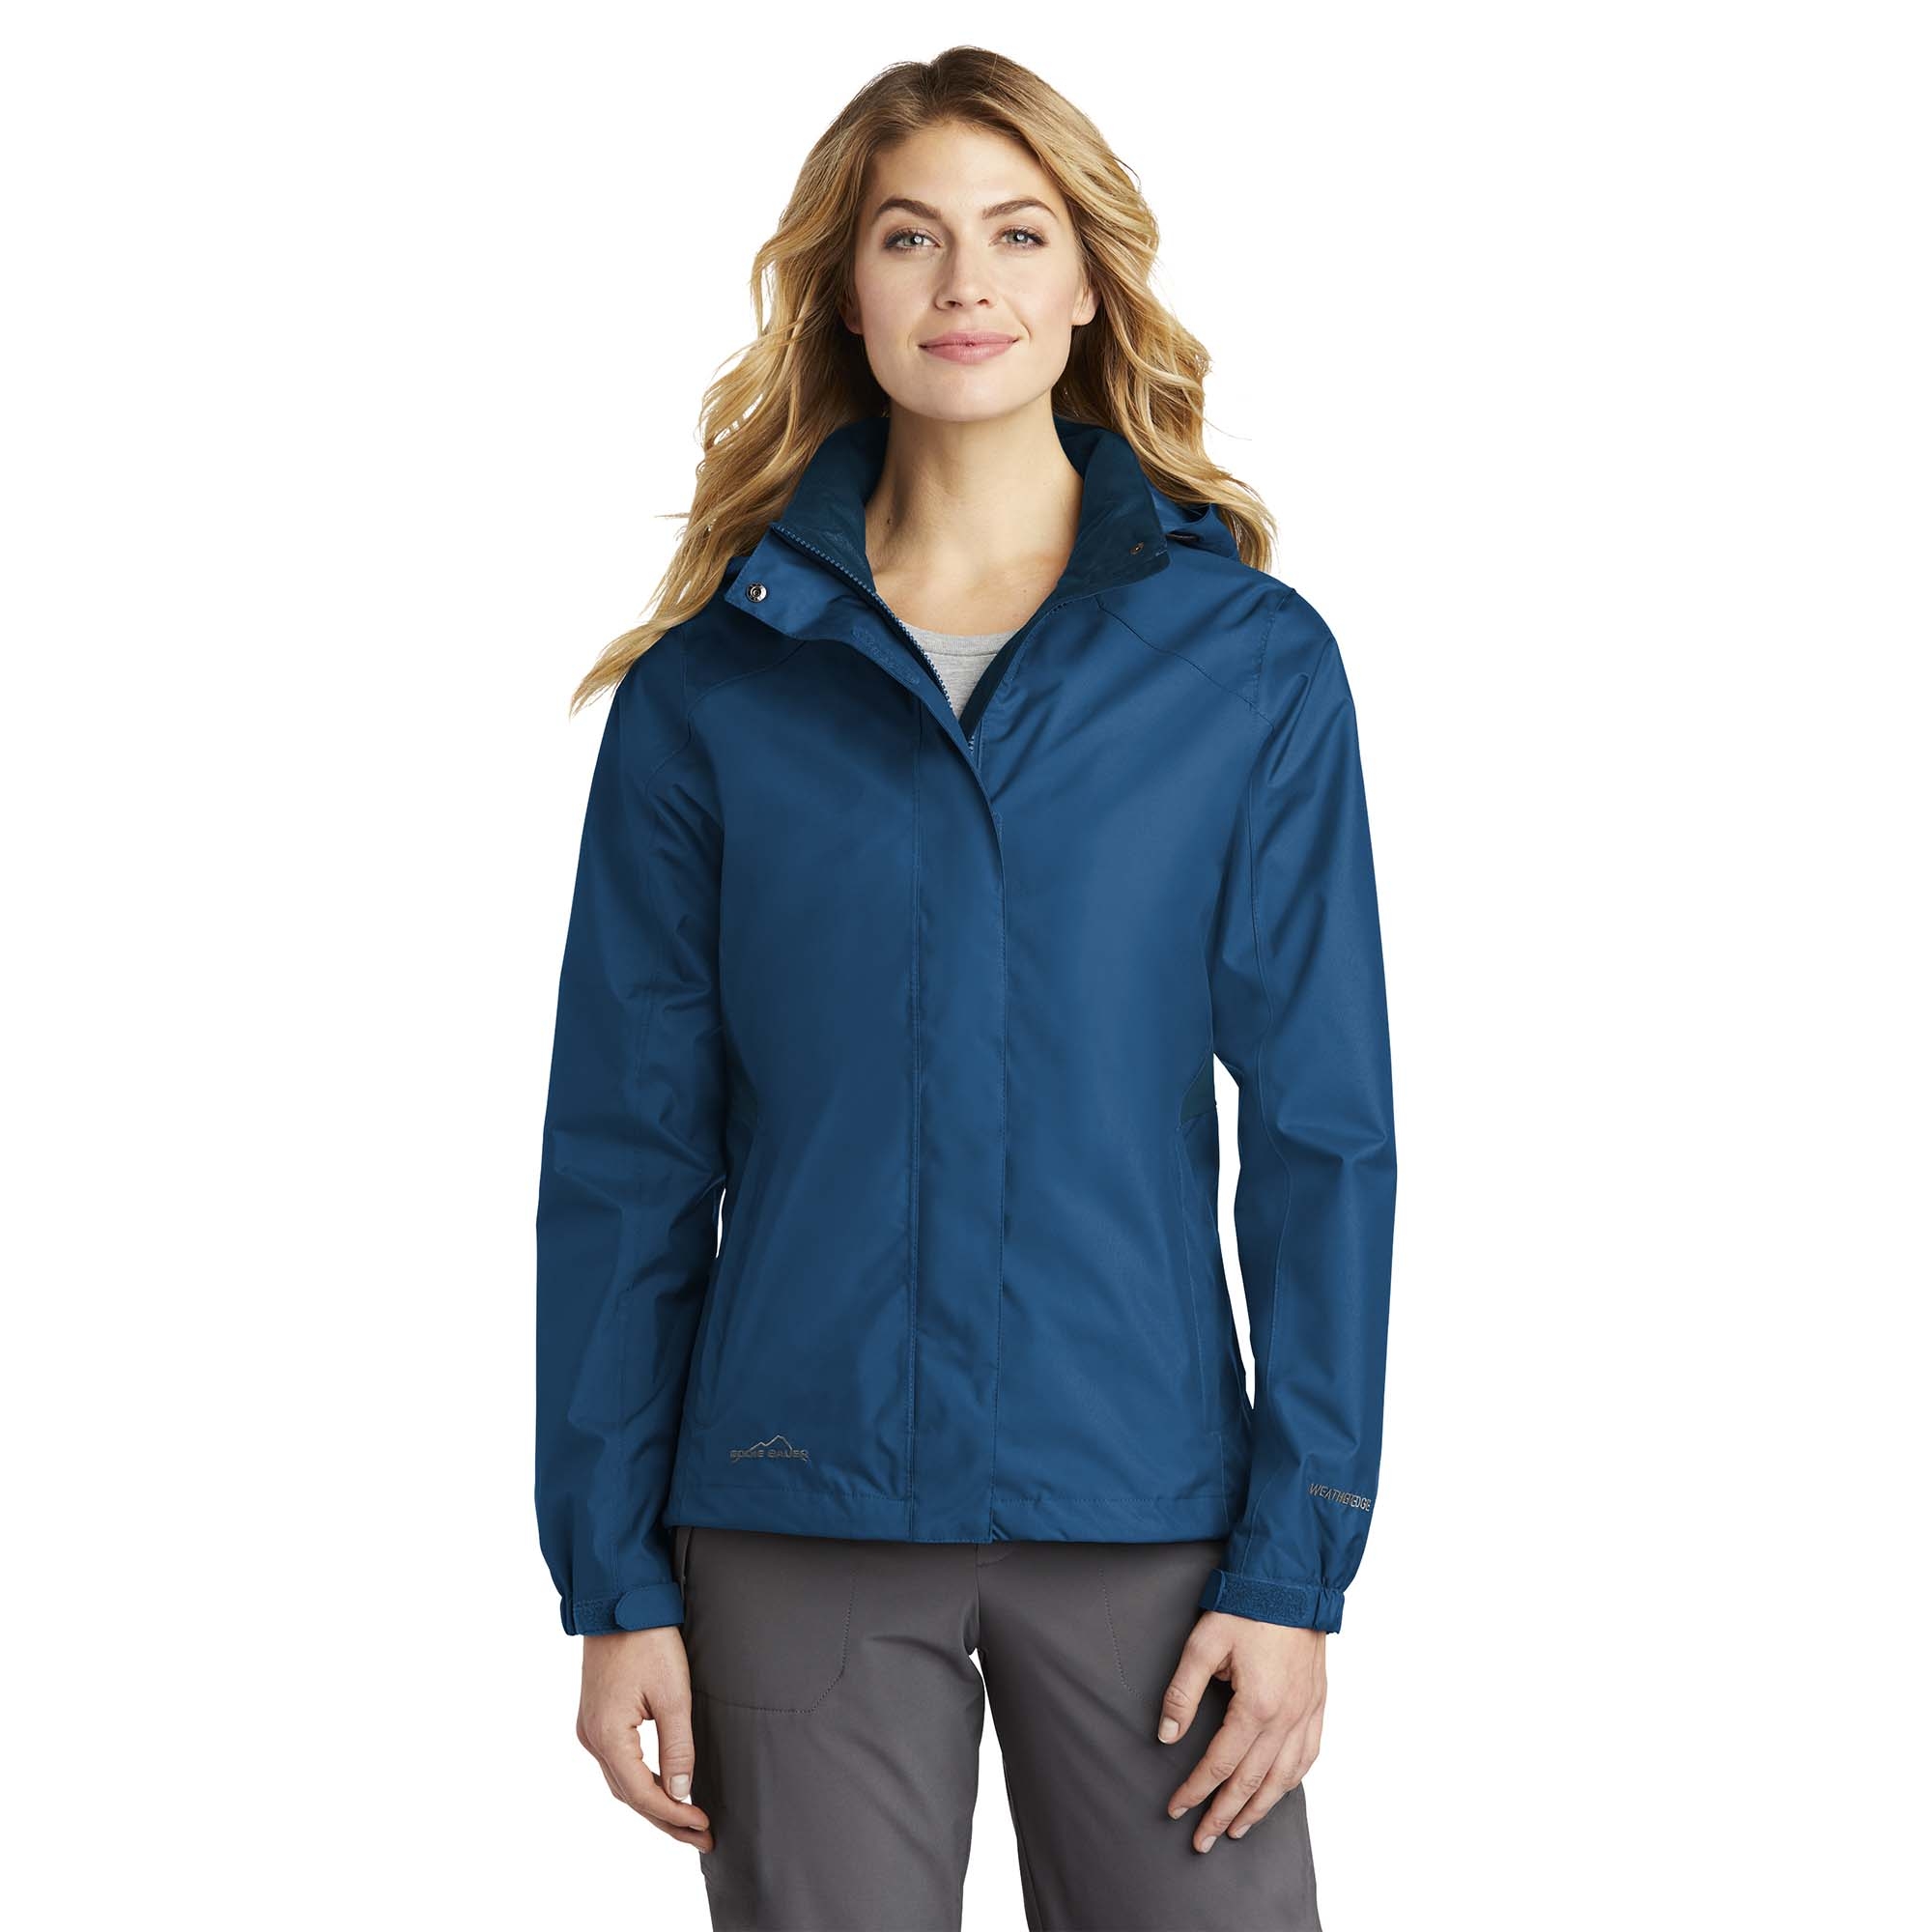 Eddie Bauer Jackets: Women's EB551 DPS Blue Waterproof Breathable Rain  Jacket